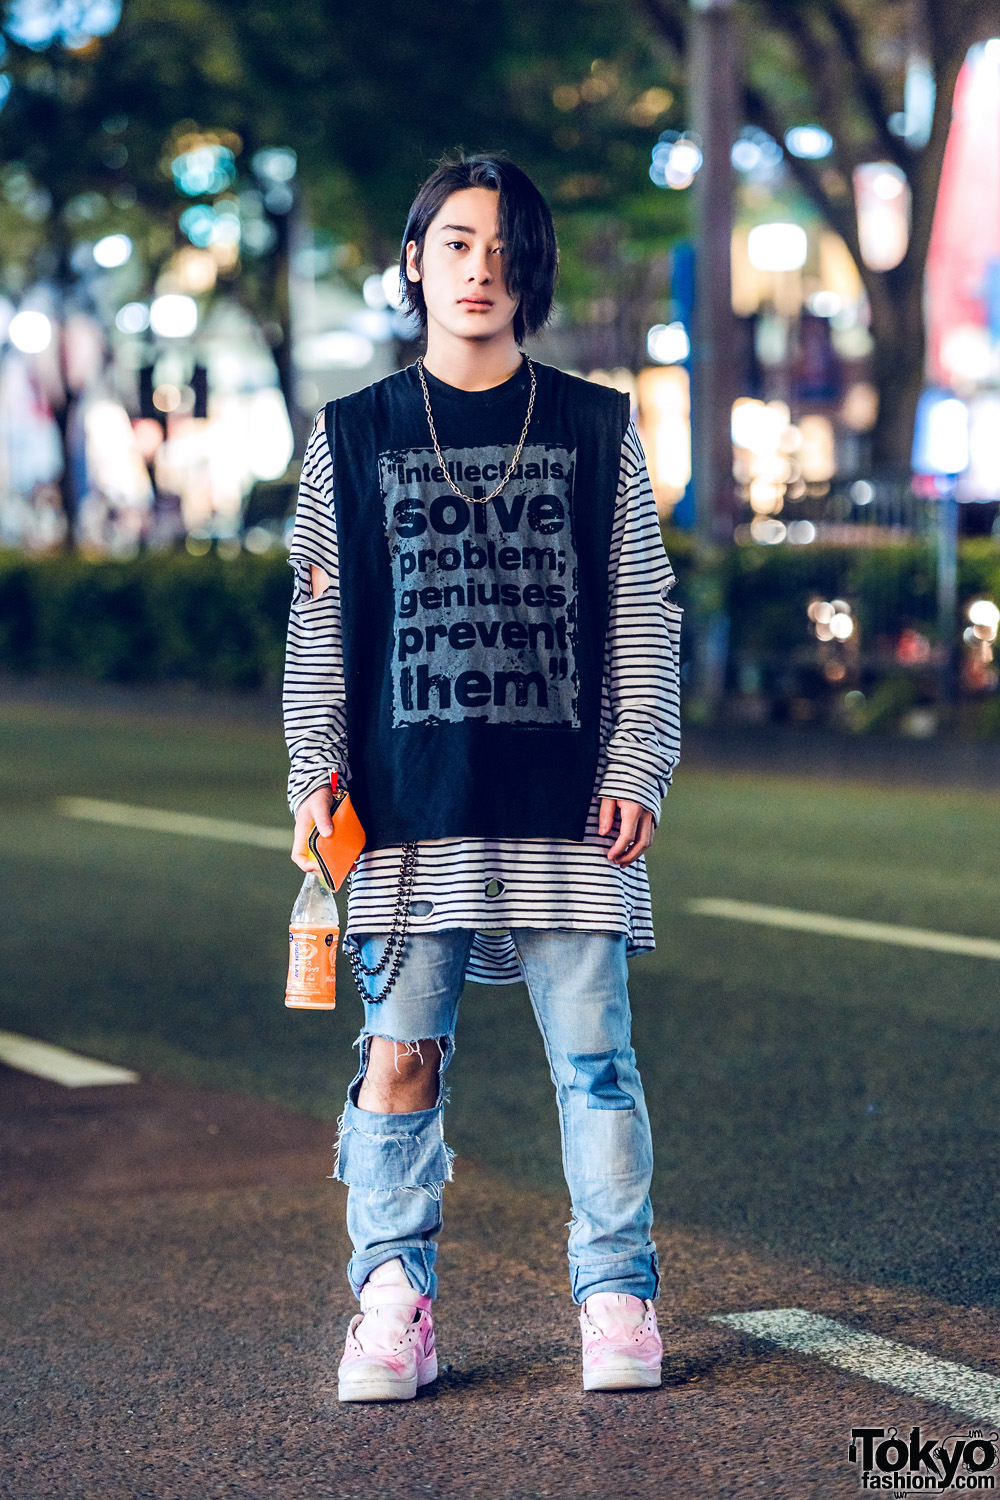 Distressed Street Casual Harajuku Fashion w/ Statement Sleeveless Tee, Striped Sweatshirt, Ripped Jeans & Nike High Top Sneakers